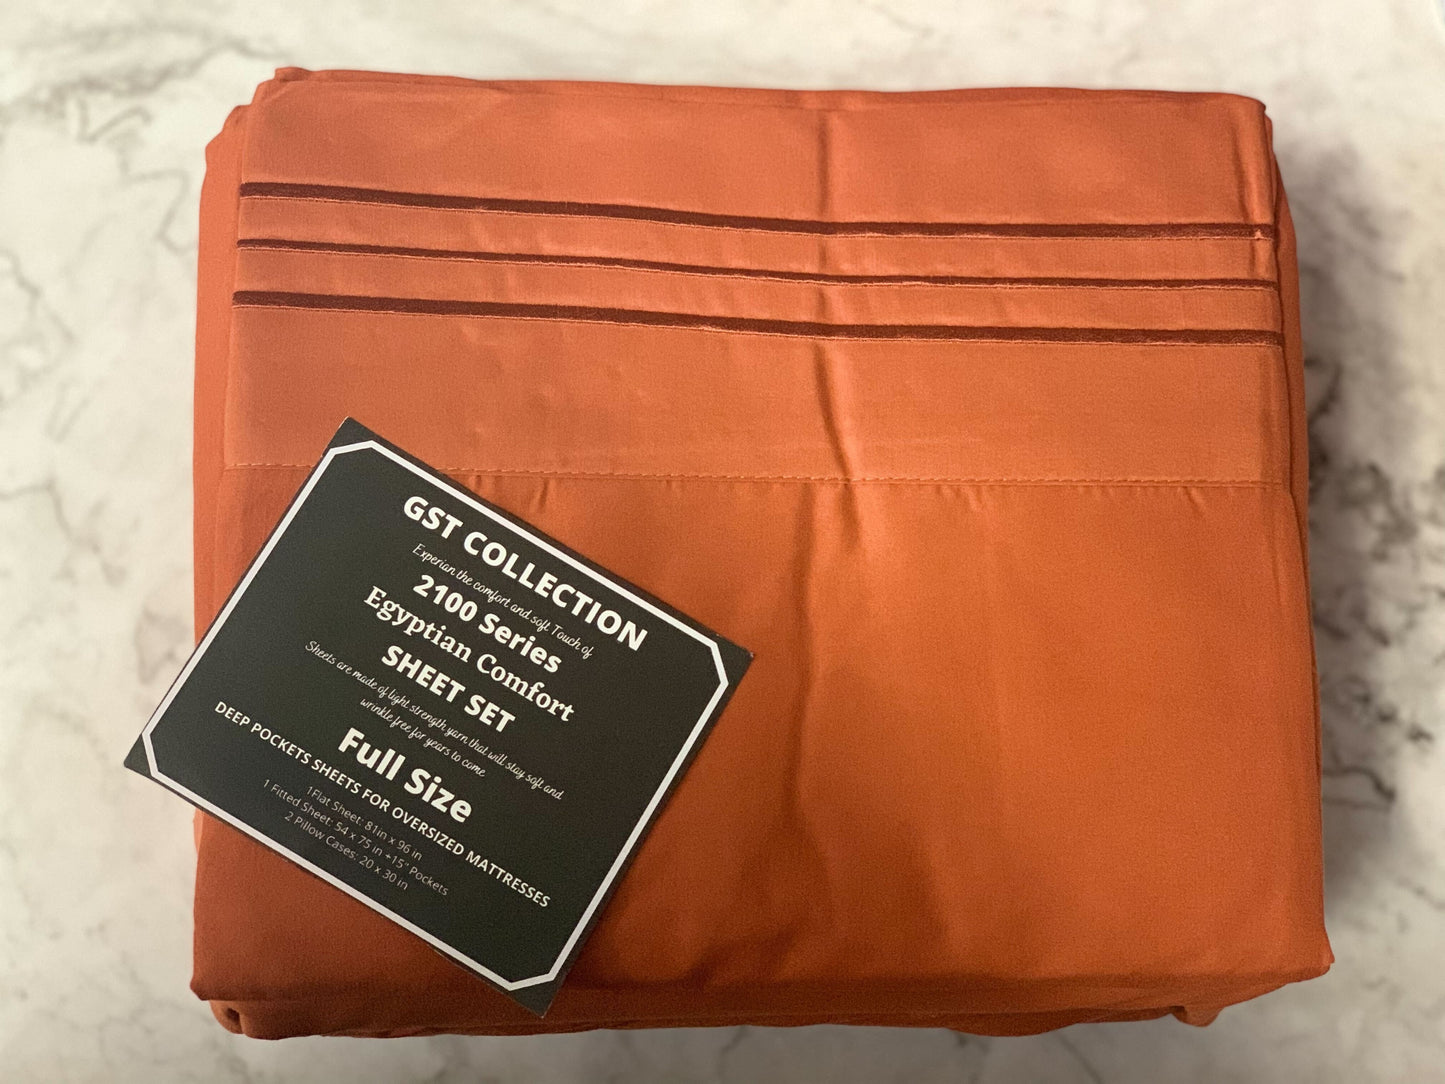 GST Designz Collection - Egyptian Comfort Bed Sheet Set  - FULL